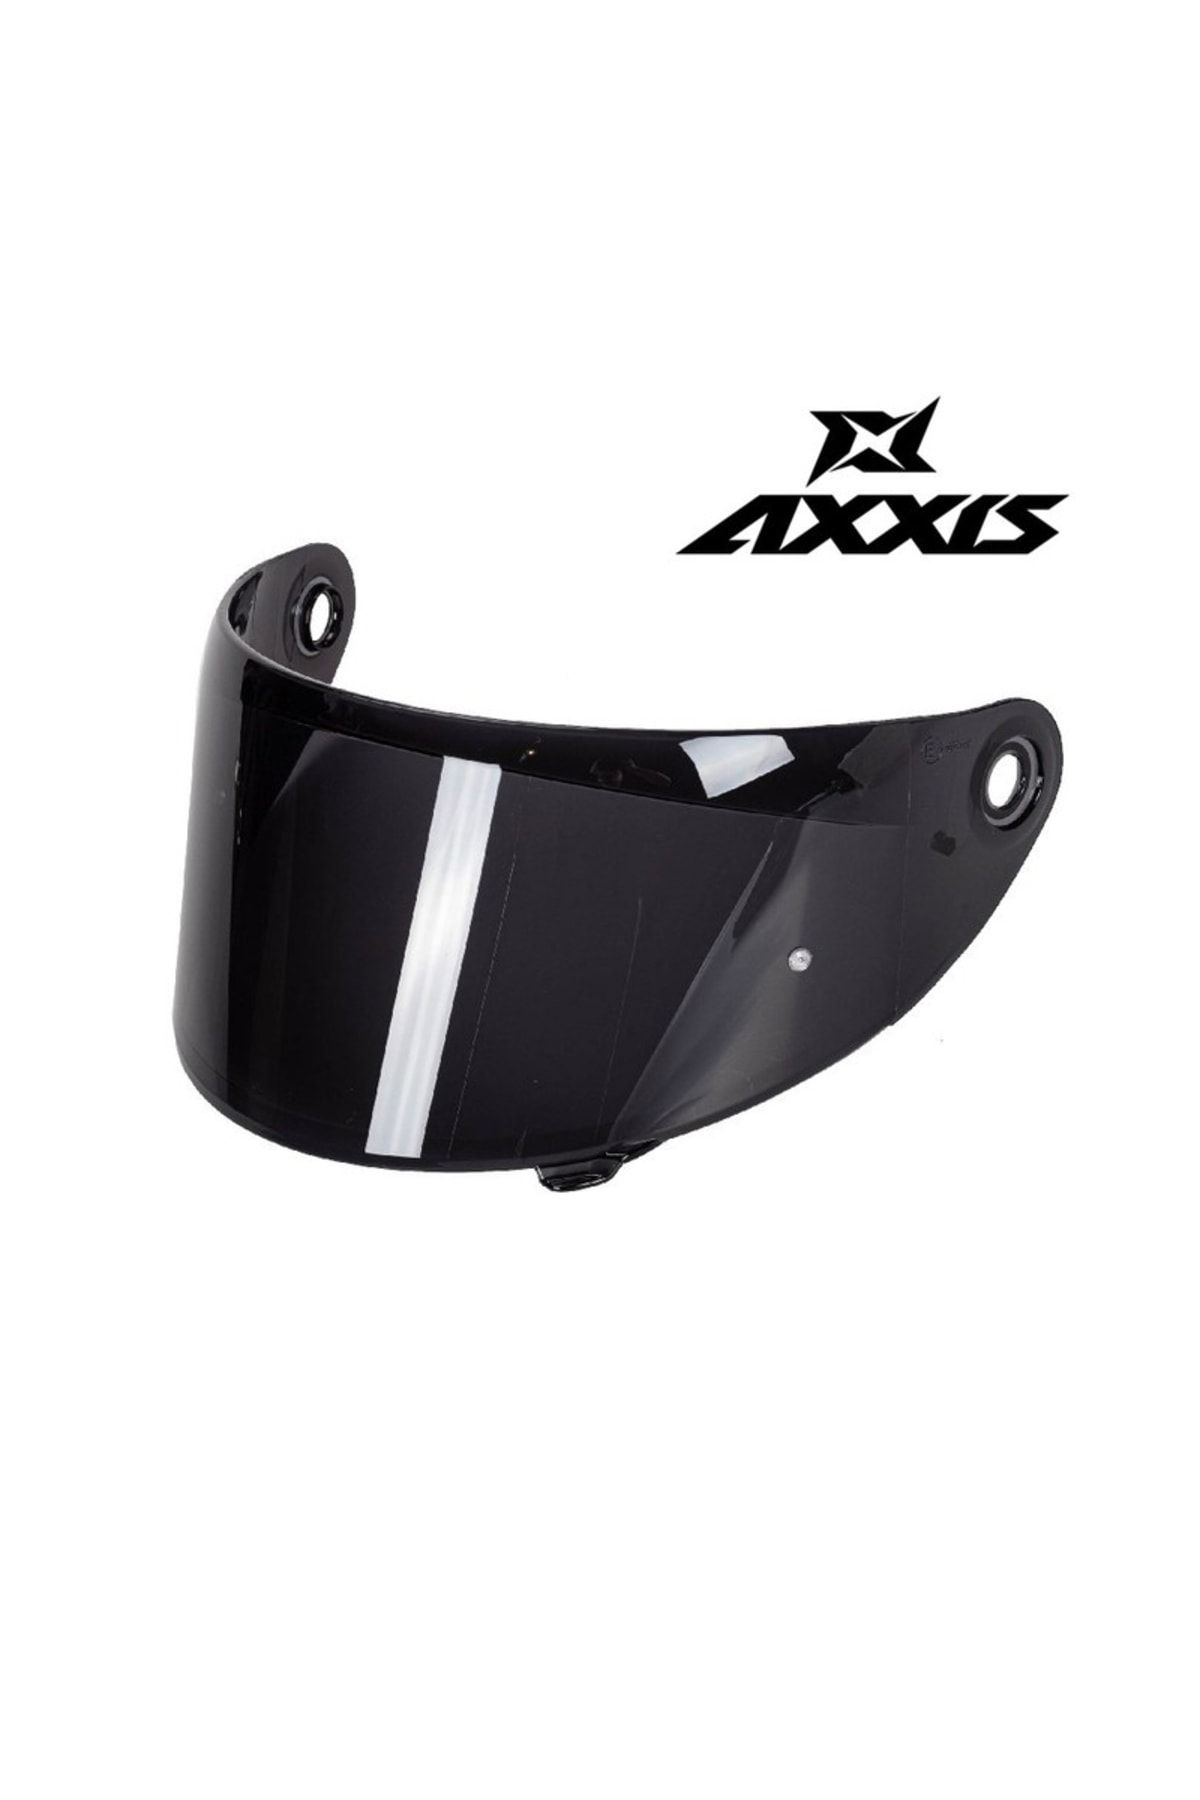 Axxis Draken Siyah Vizör Orjinal V-31/18c V18c